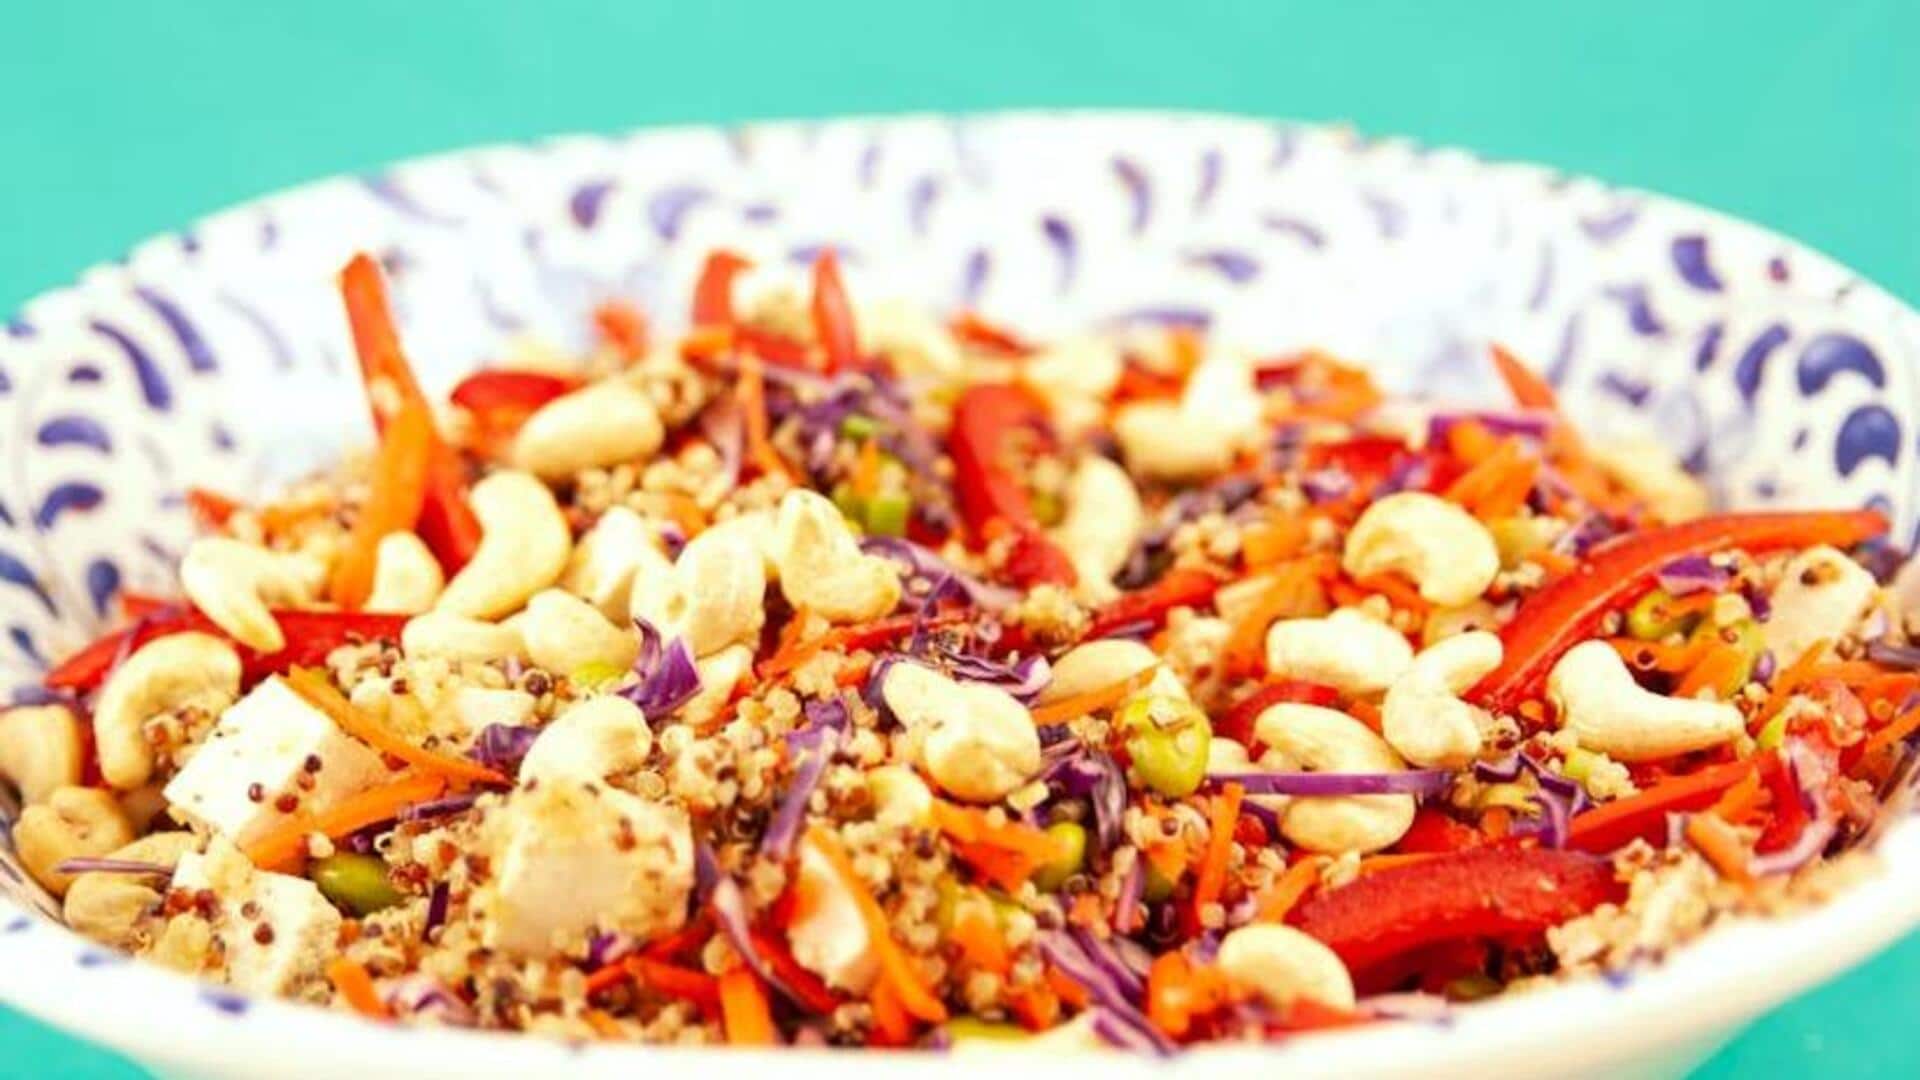 Health freaks will love this Peruvian quinoa salad